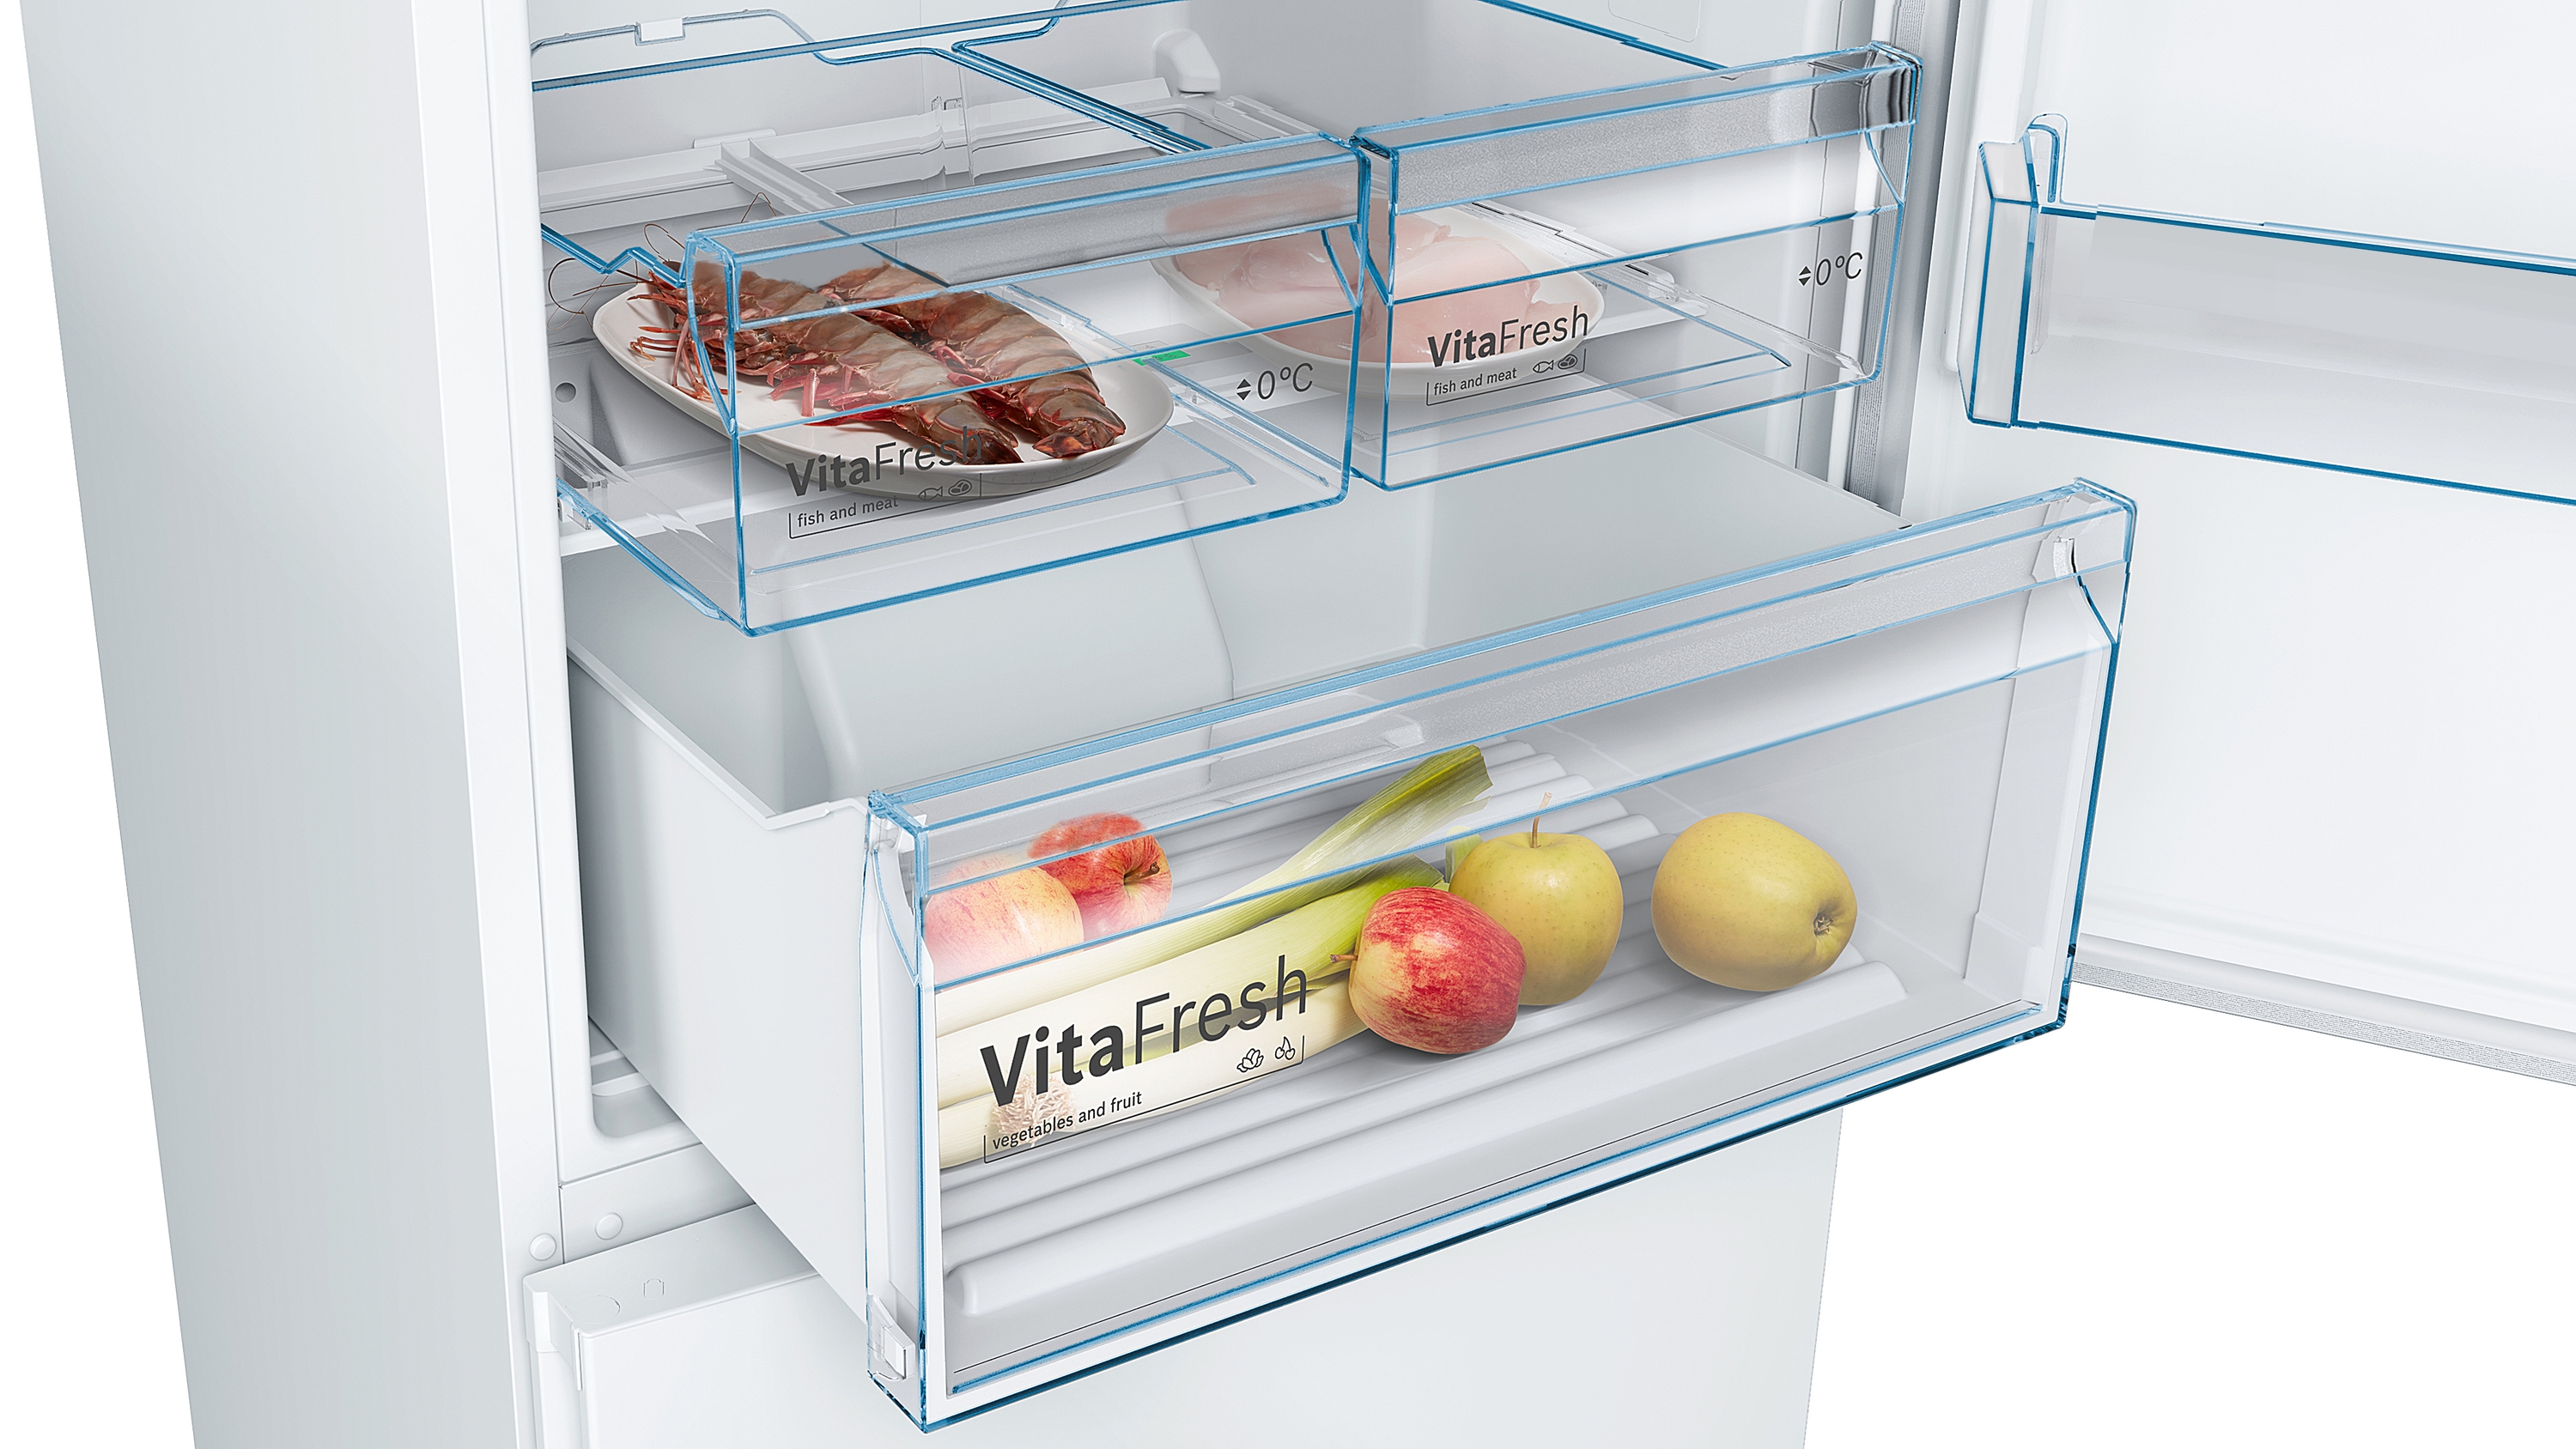 Series 4, free-standing fridge-freezer with freezer at bottom, 203 x 70 cm, White, KGN49XWEA